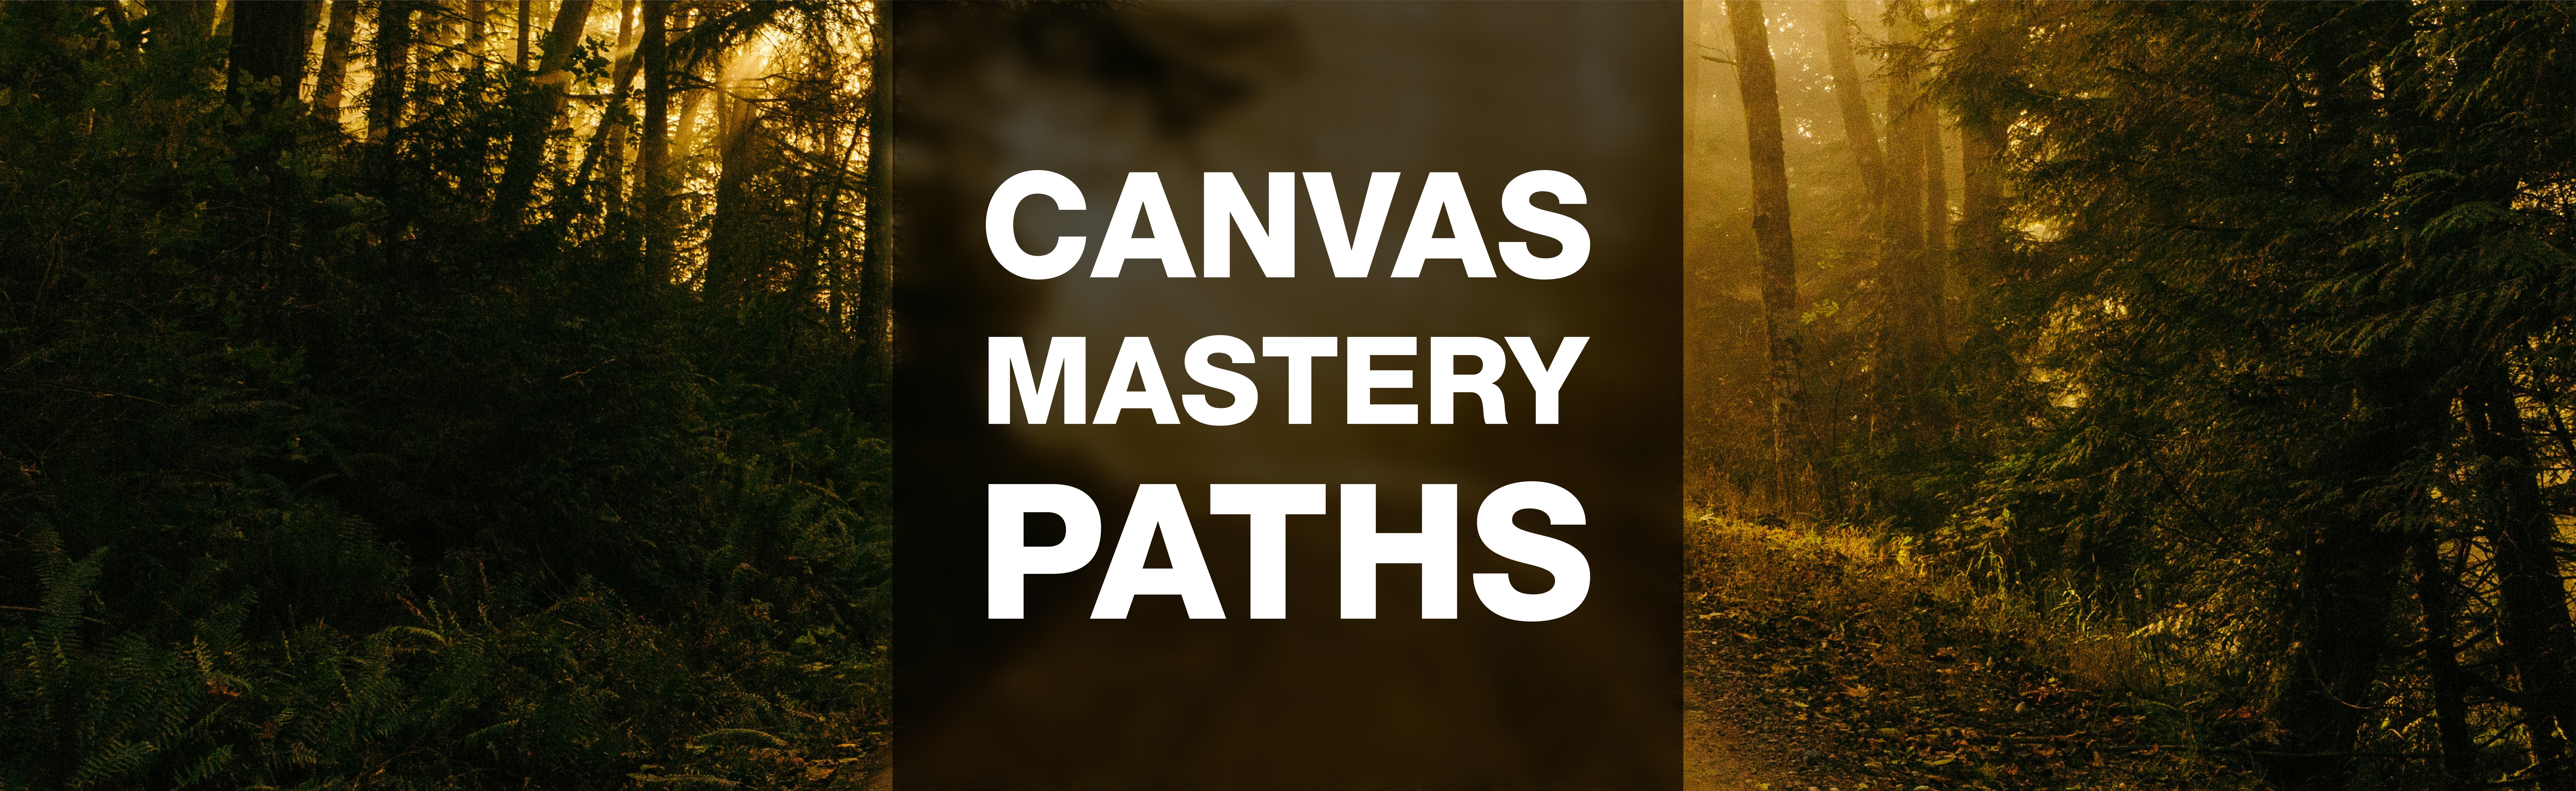 Canvas Mastery Paths